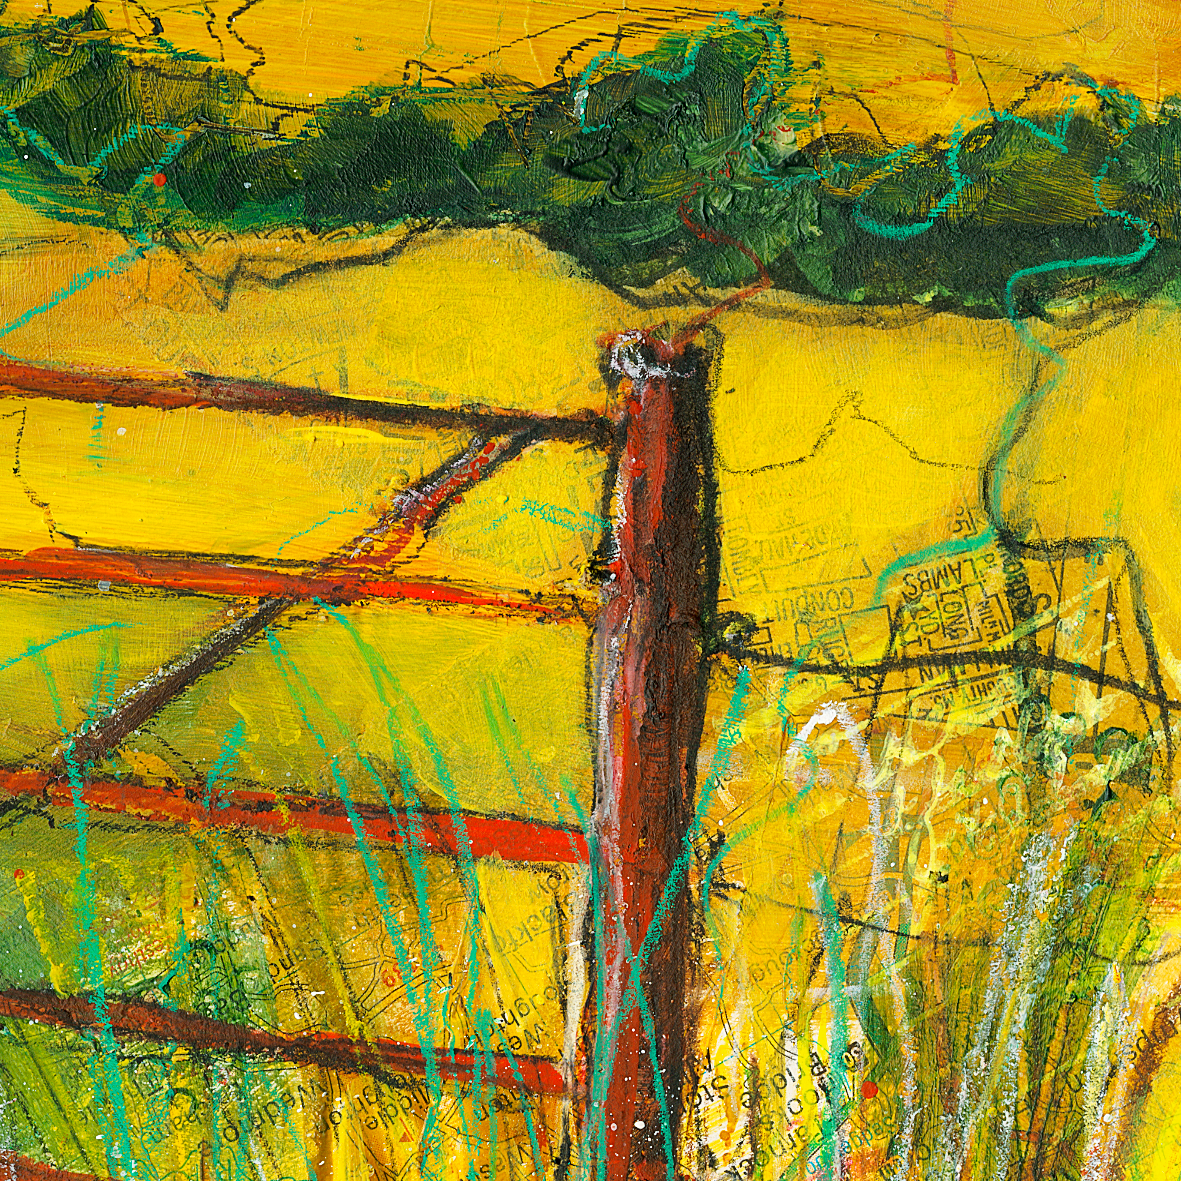 'Gated Field' [Original Painting]